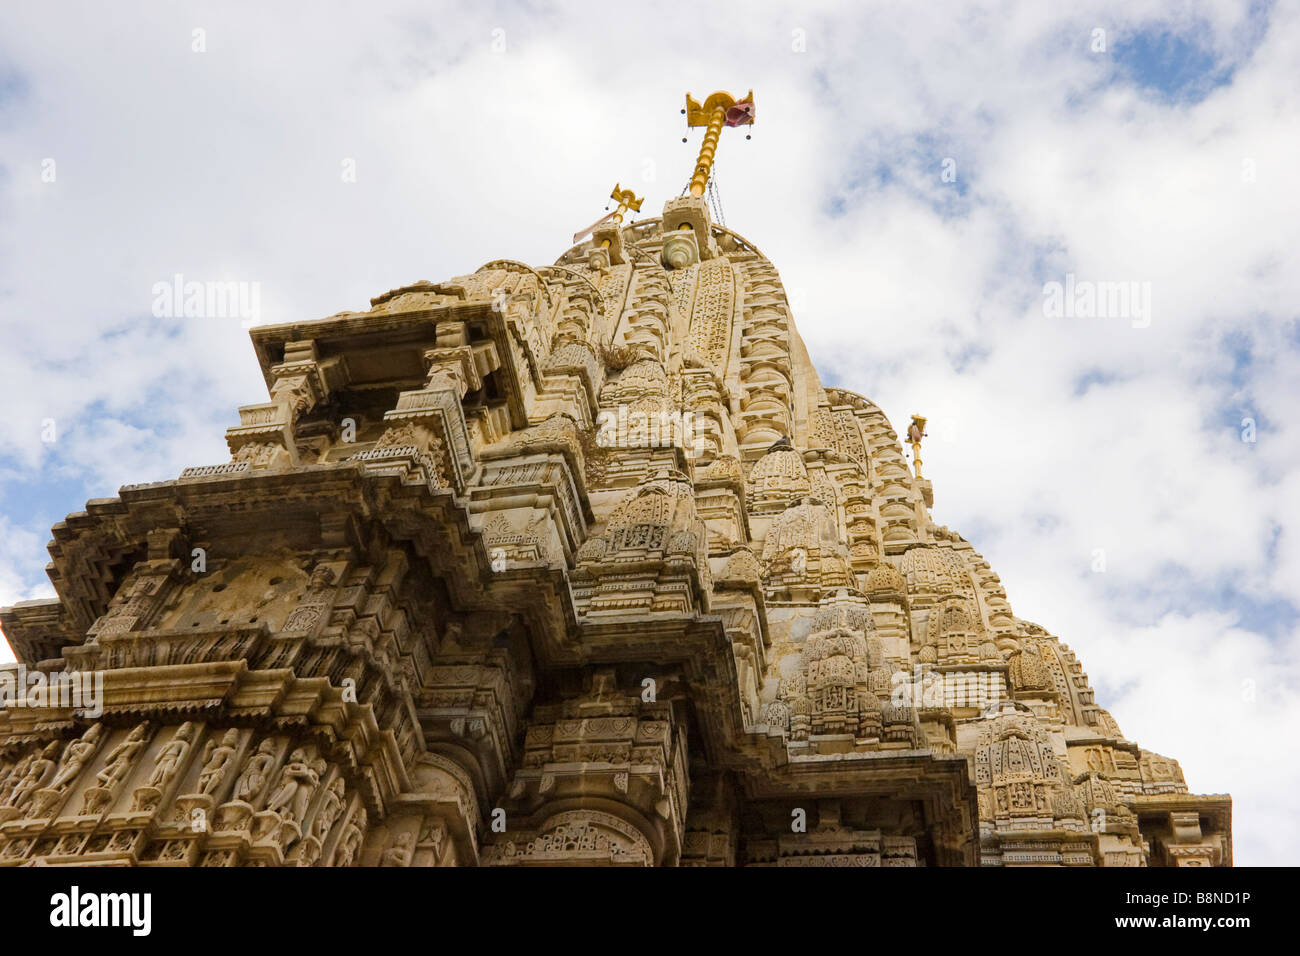 Jagdish Temple Udaipur Rajasthan India Stock Photo